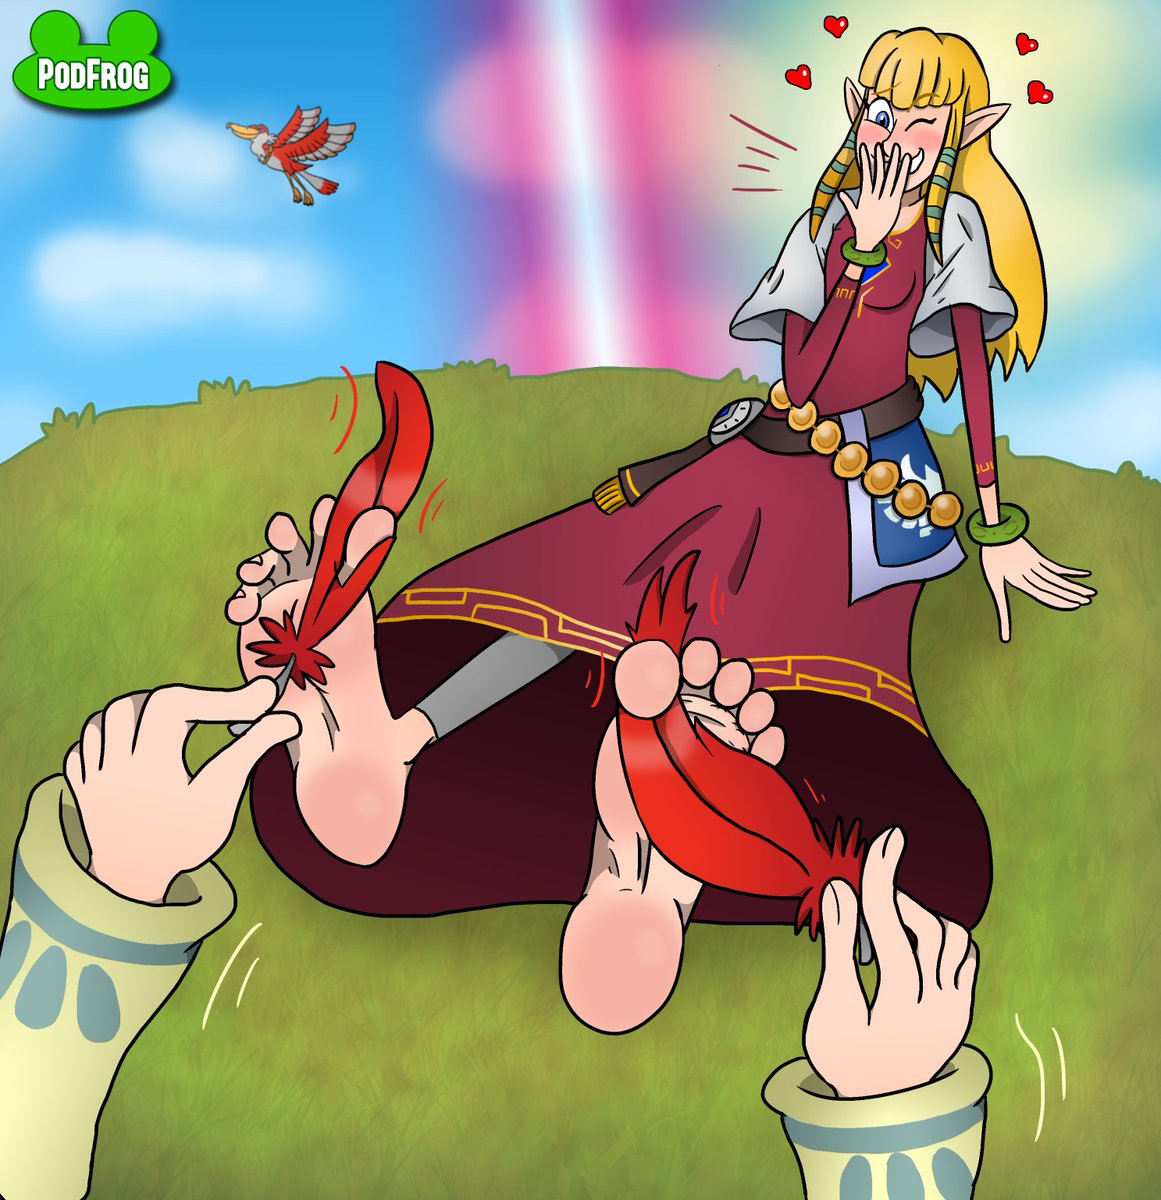 To celebrate, I'm tickling Zelda a week early! 